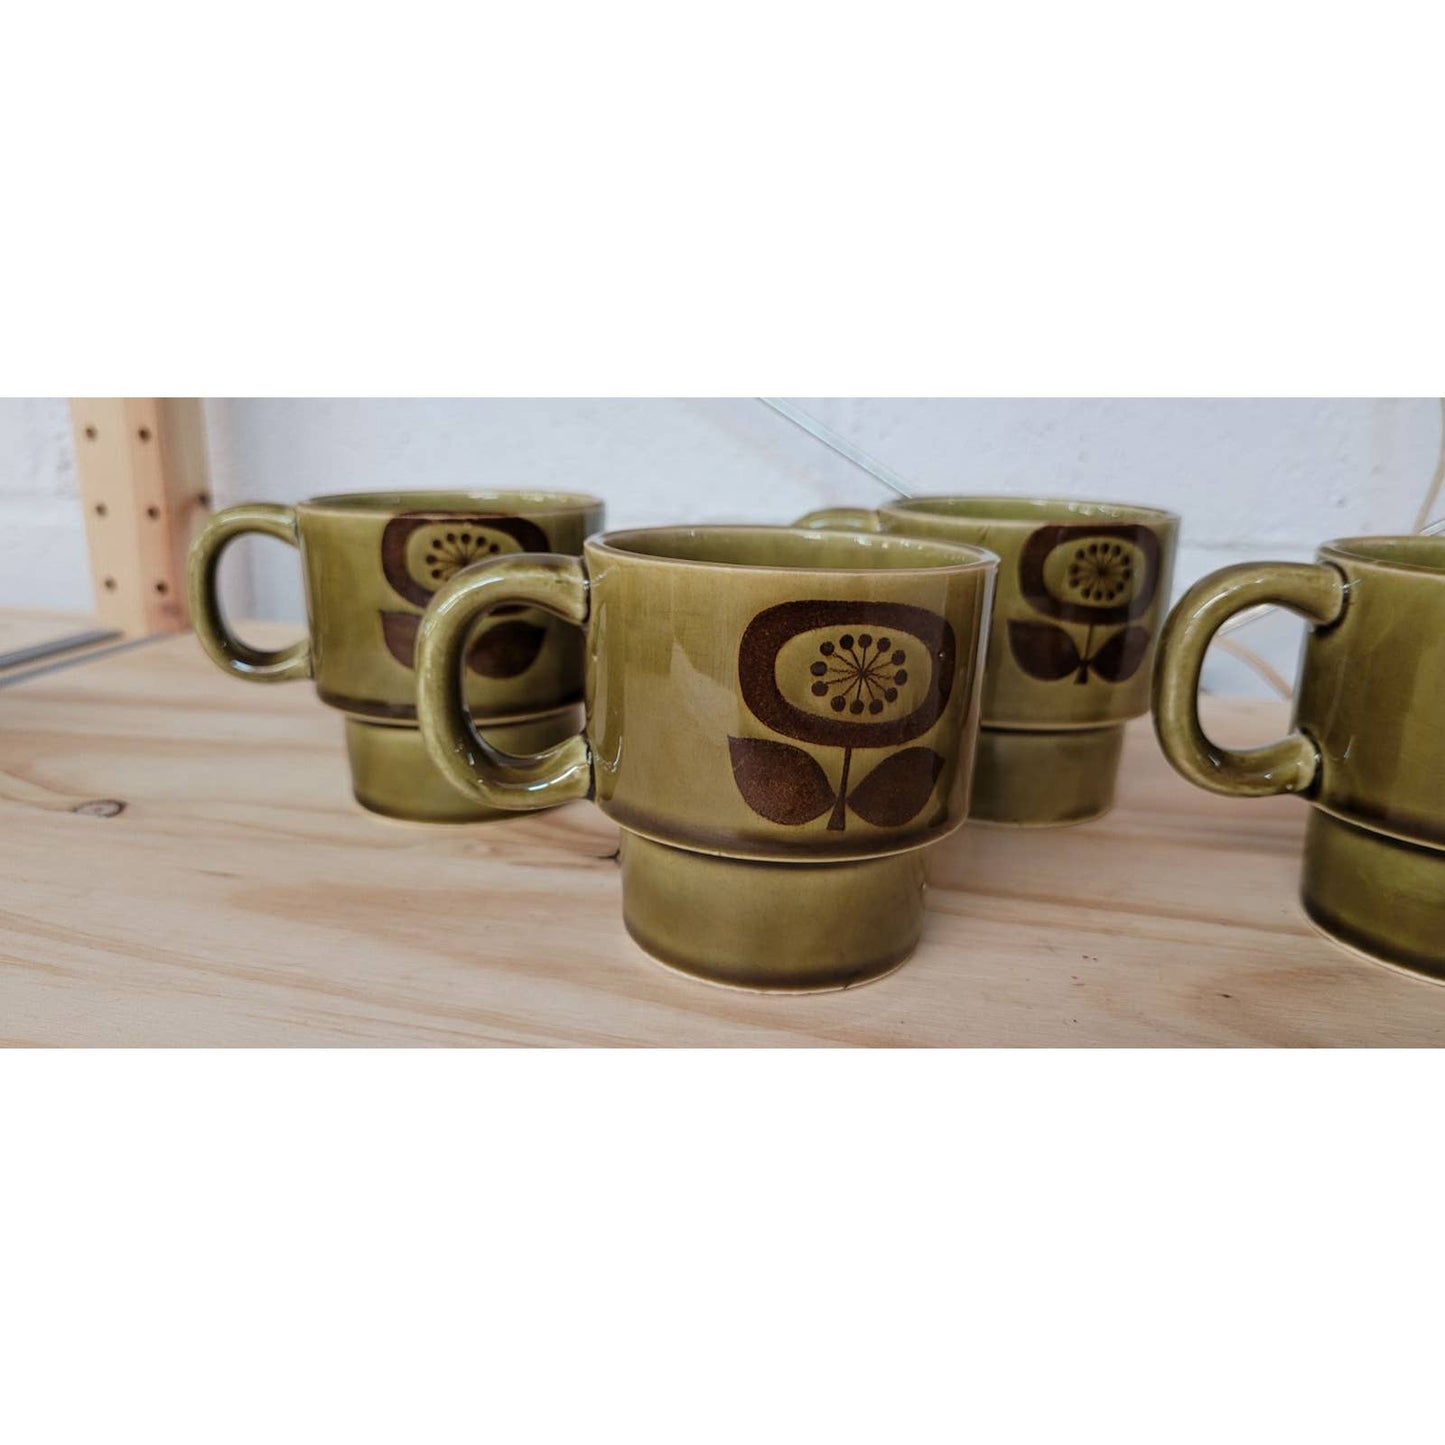 Set of 4 Vintage Mod Green Mugs